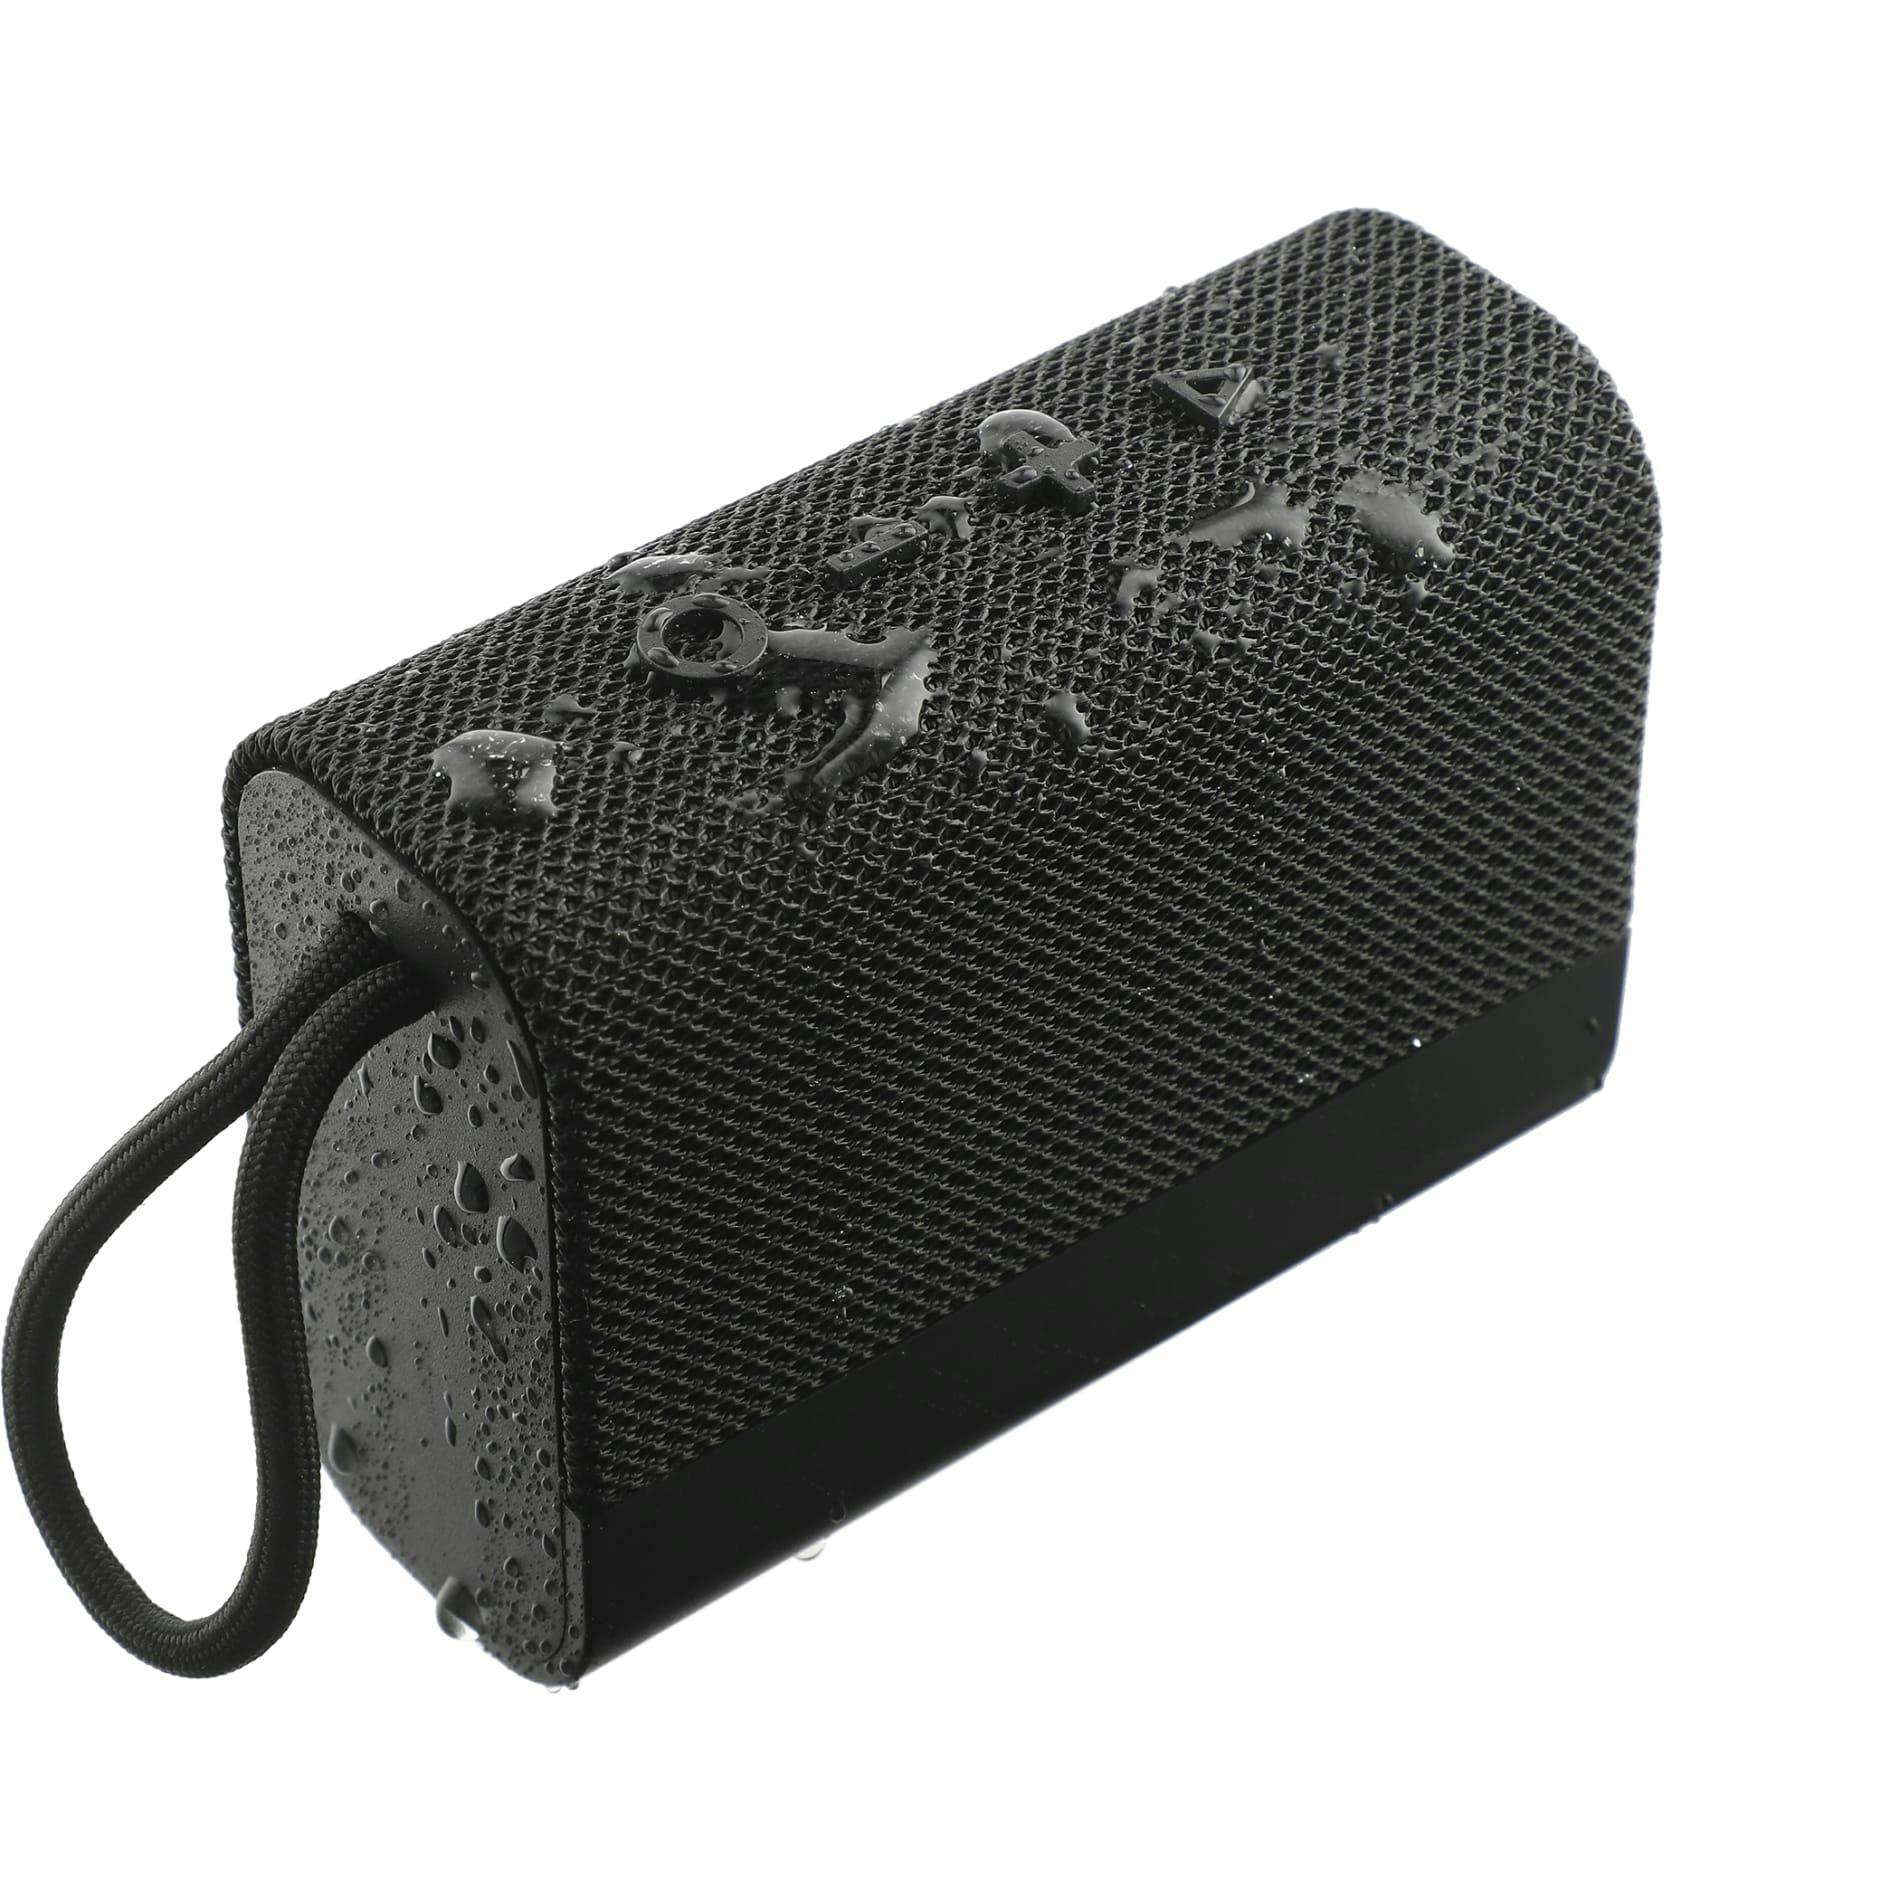 Fabric Banner Waterproof Bluetooth Speaker - additional Image 6